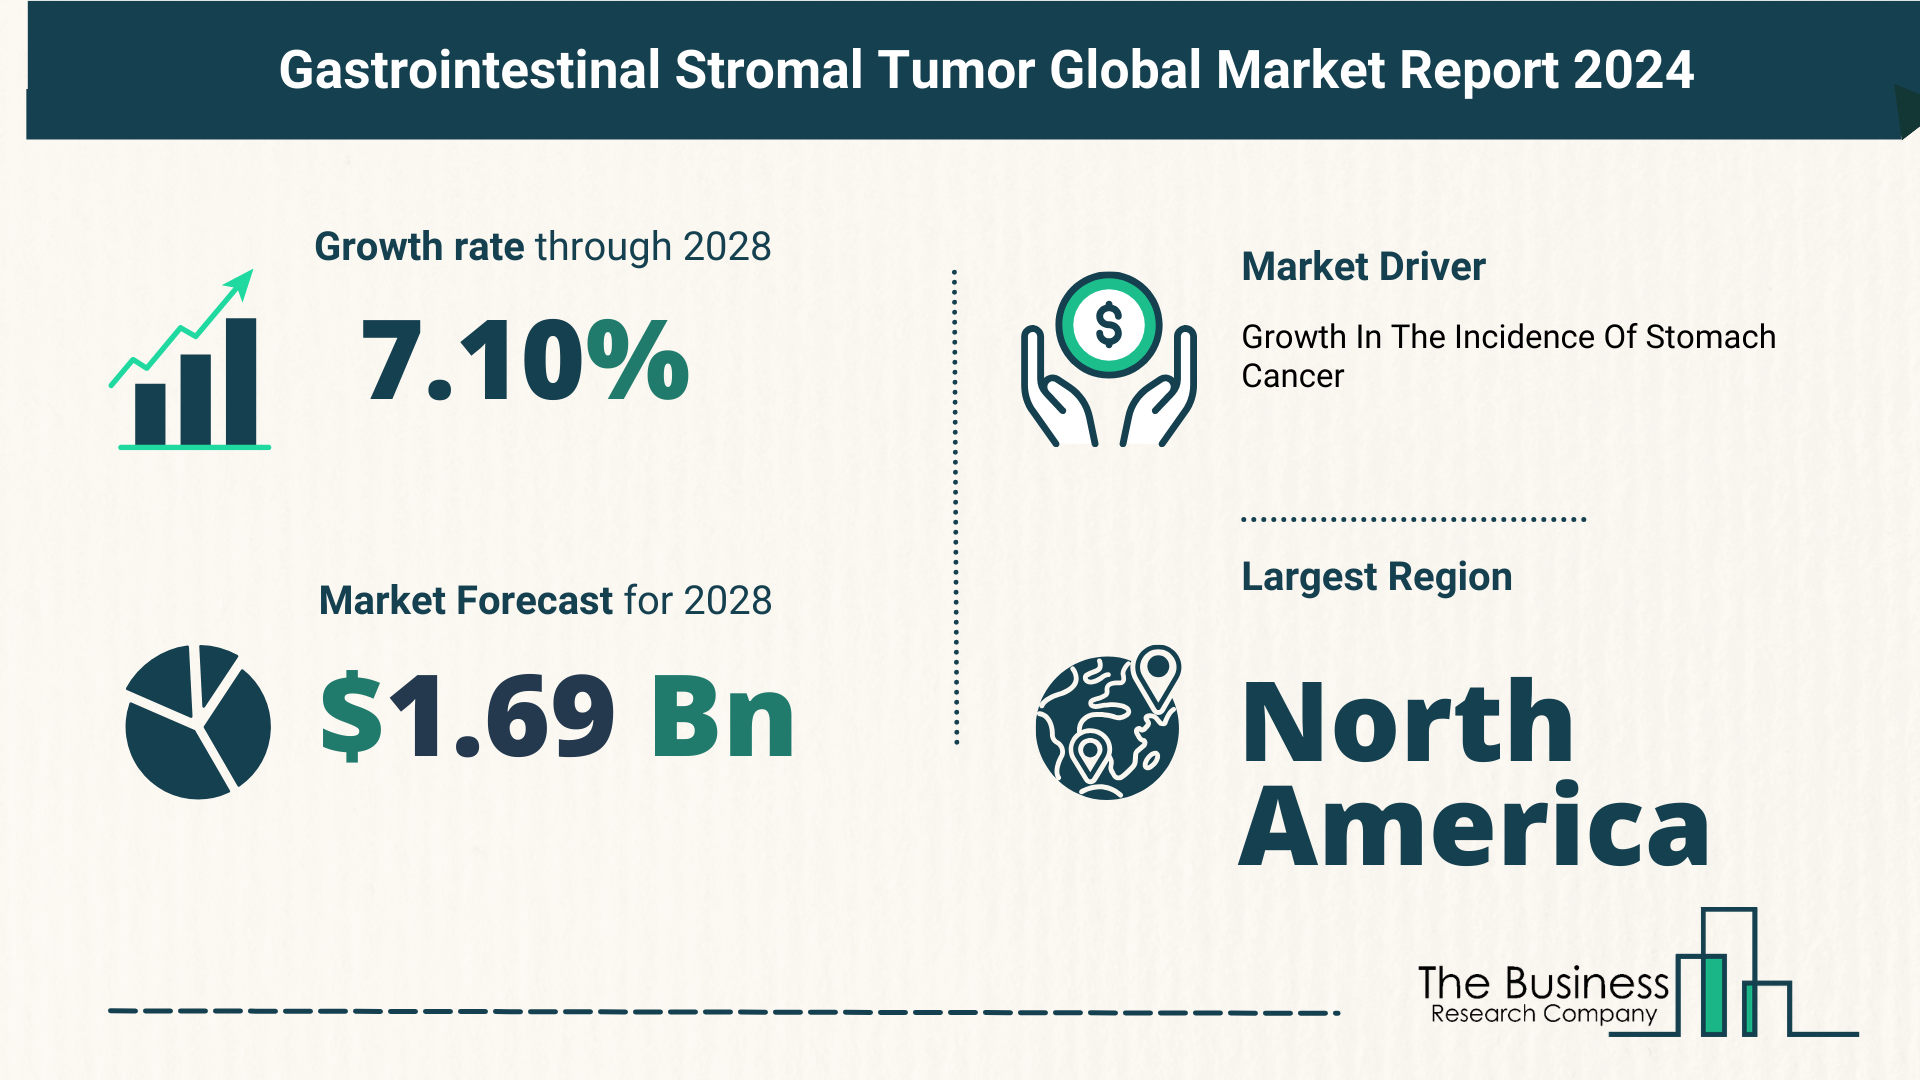 Global Gastrointestinal Stromal Tumor Market